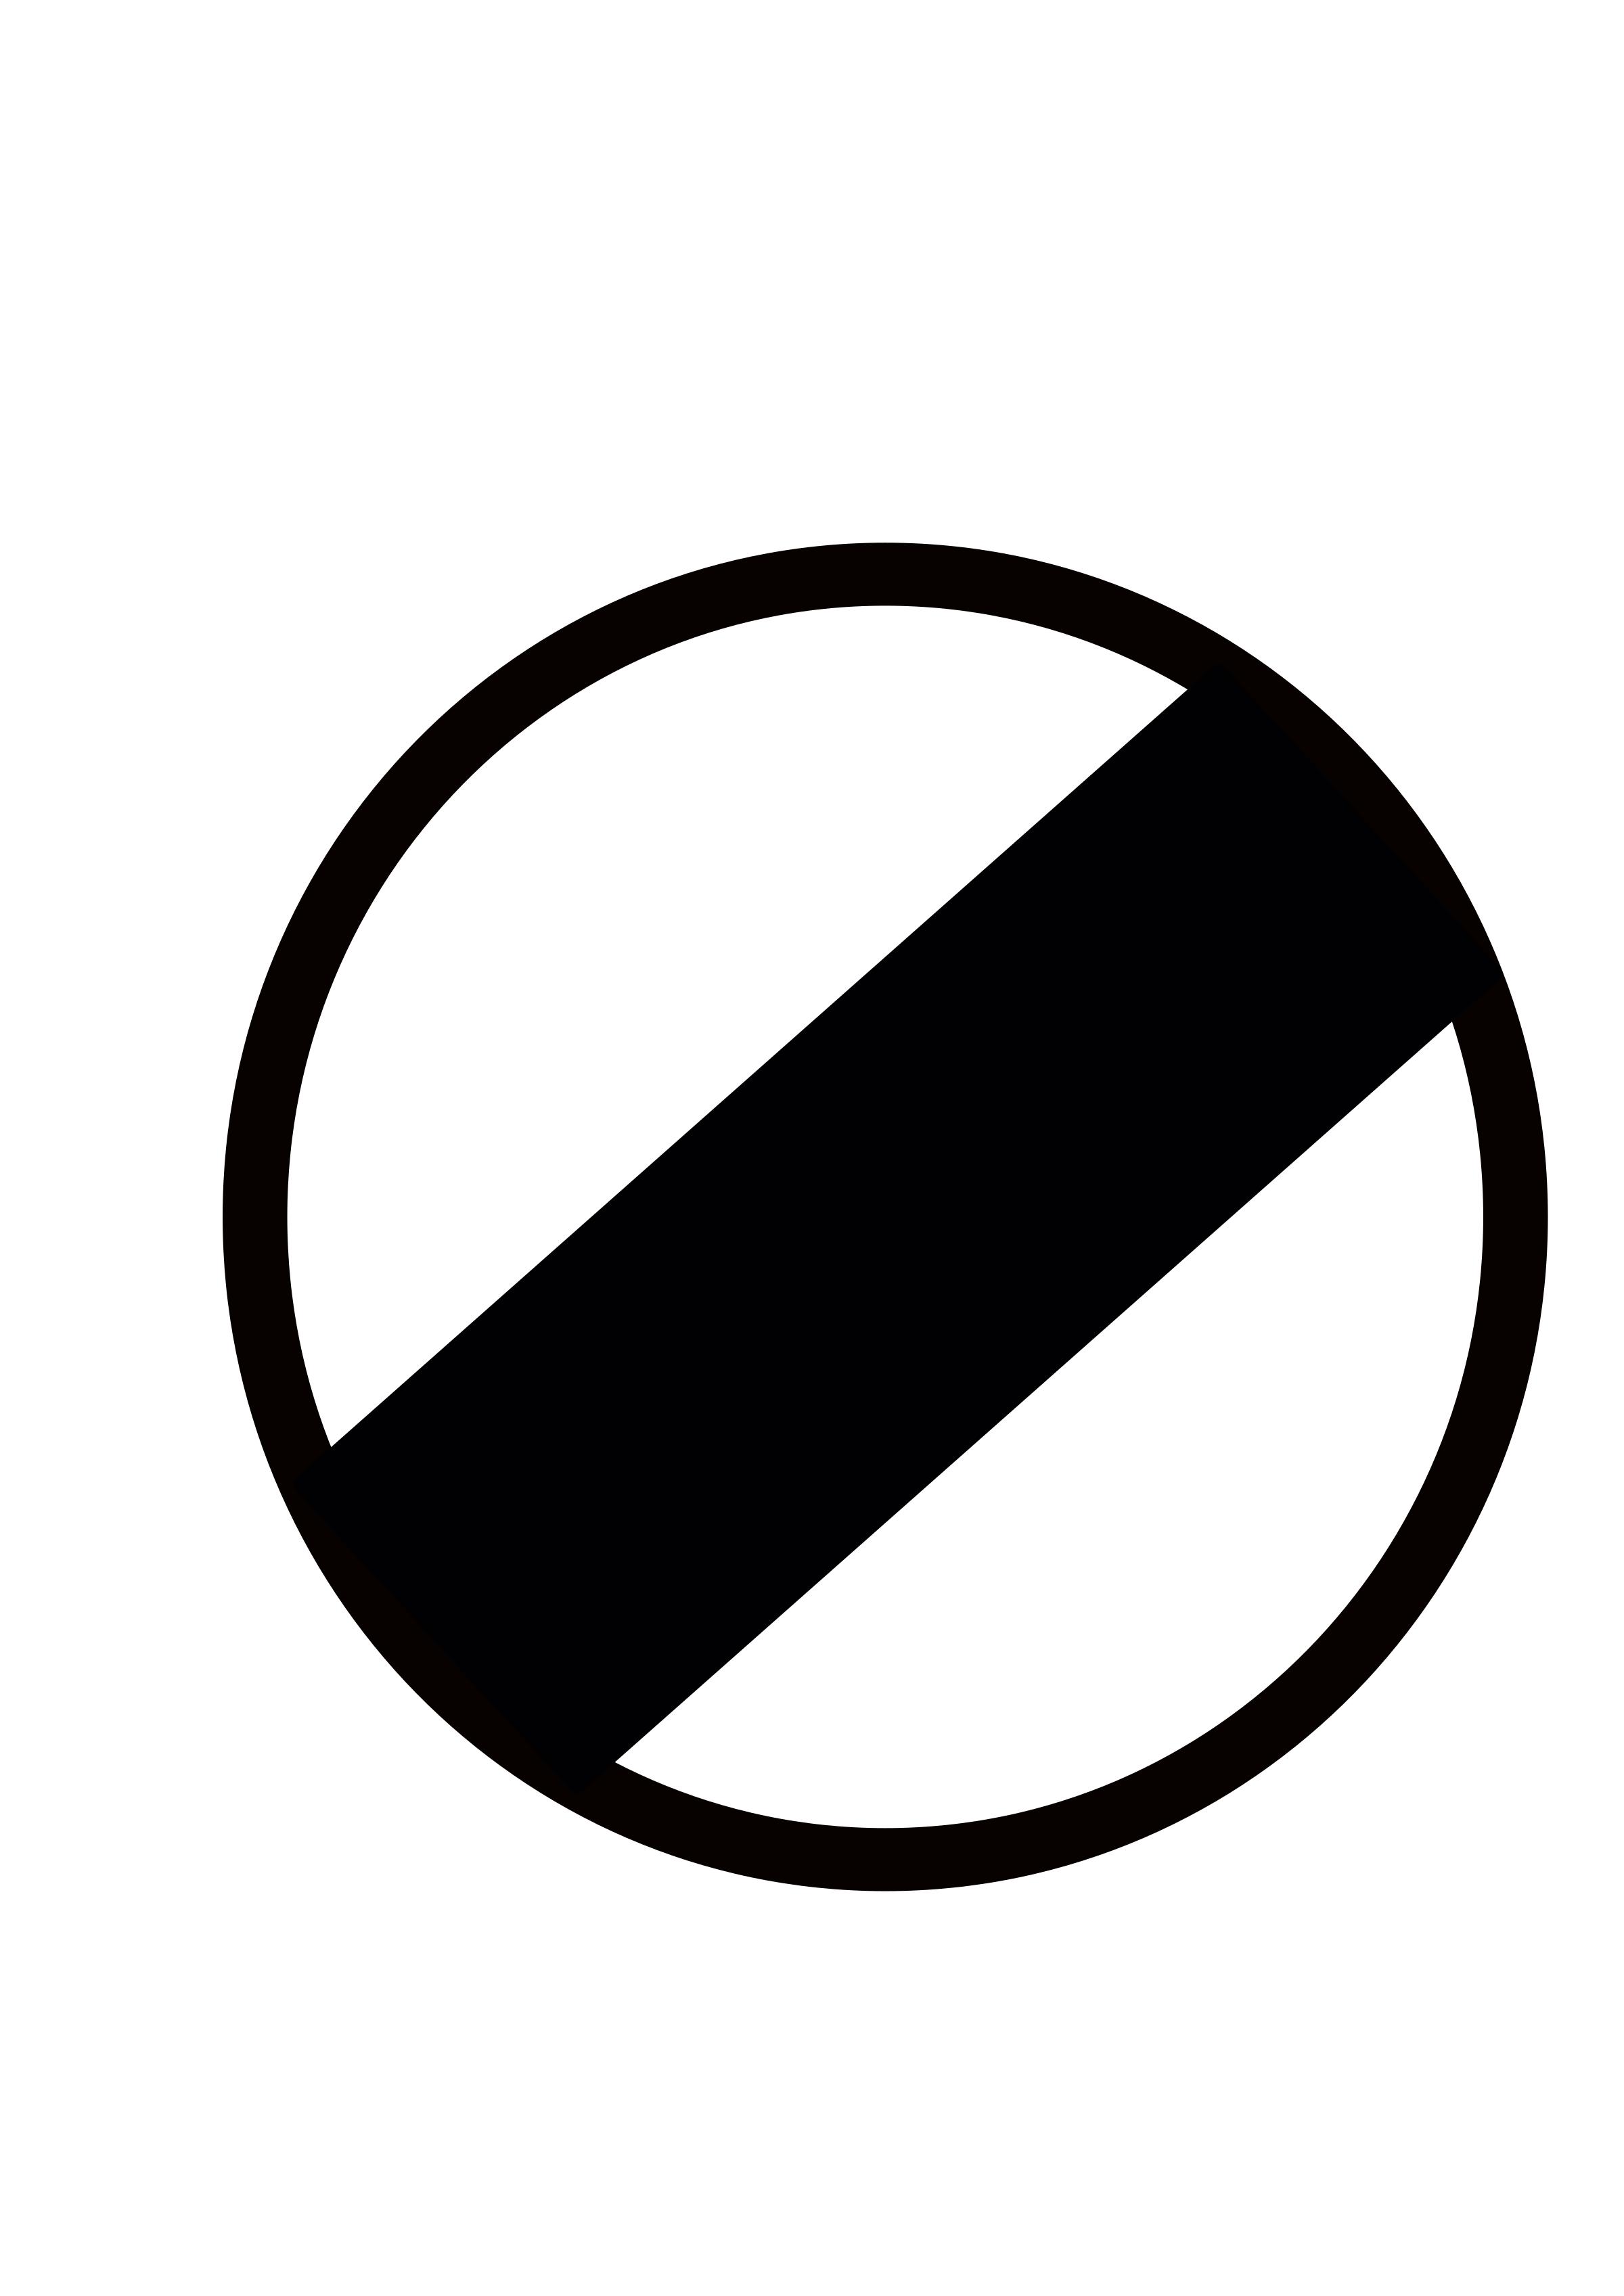 Indian road sign - Restriction ends png